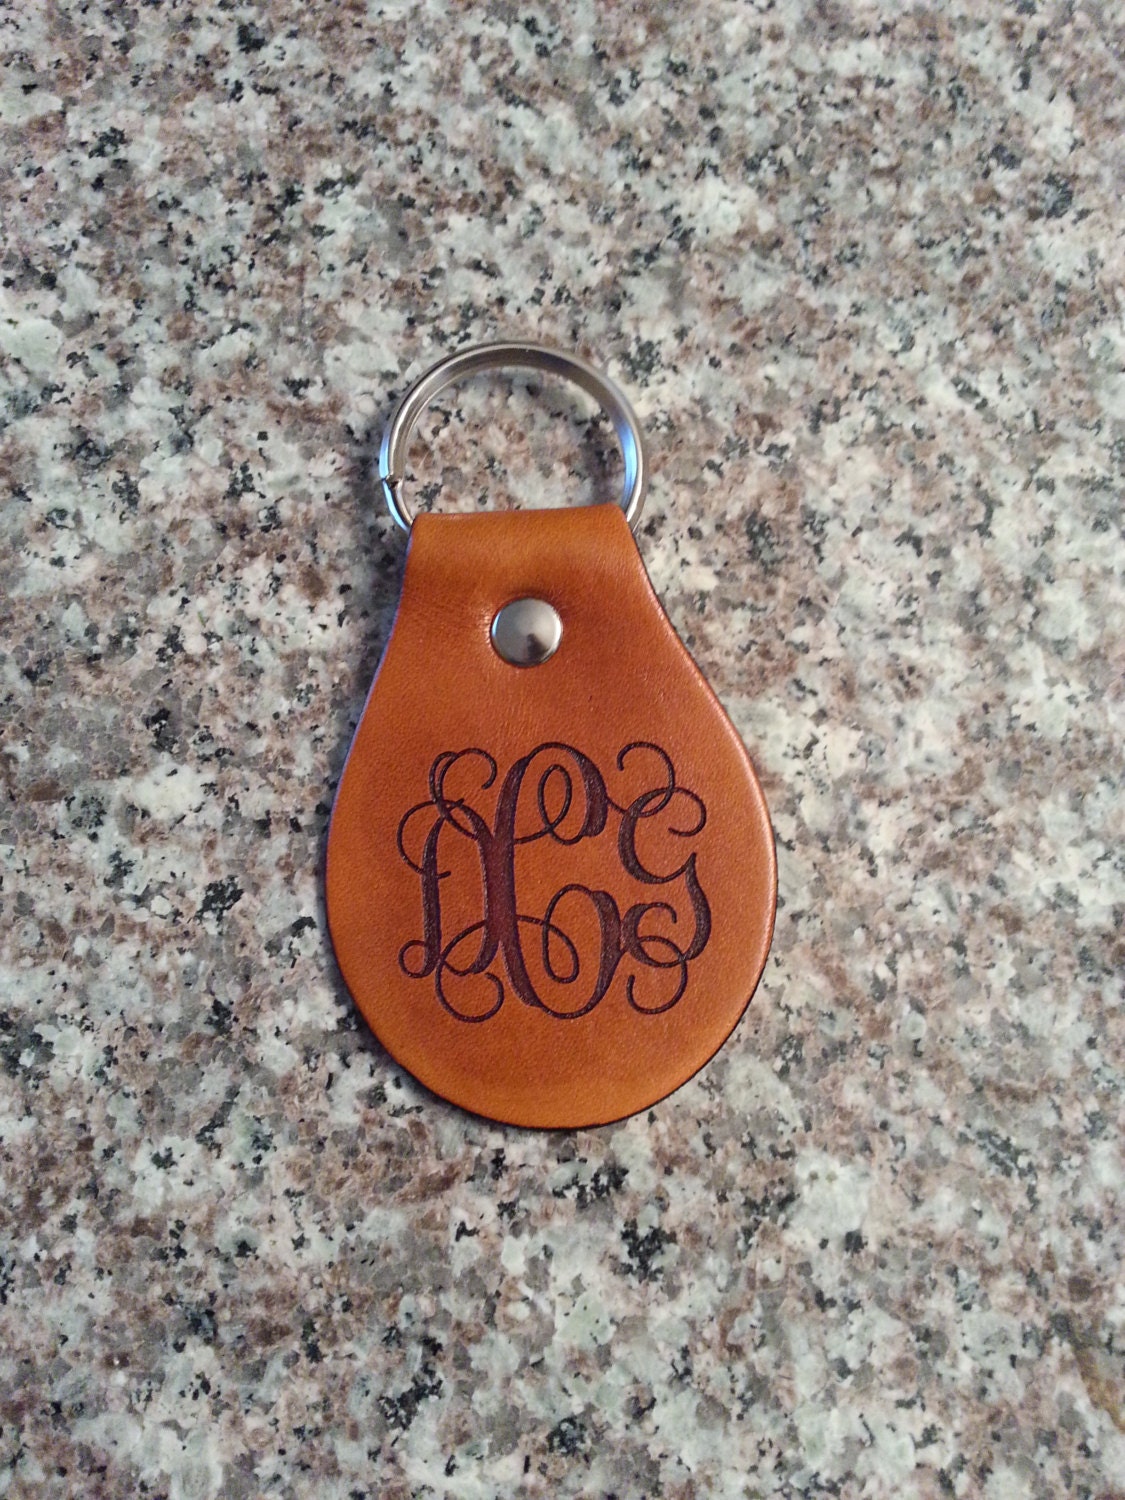 Monogram Leather keychain personalized brown key tag key